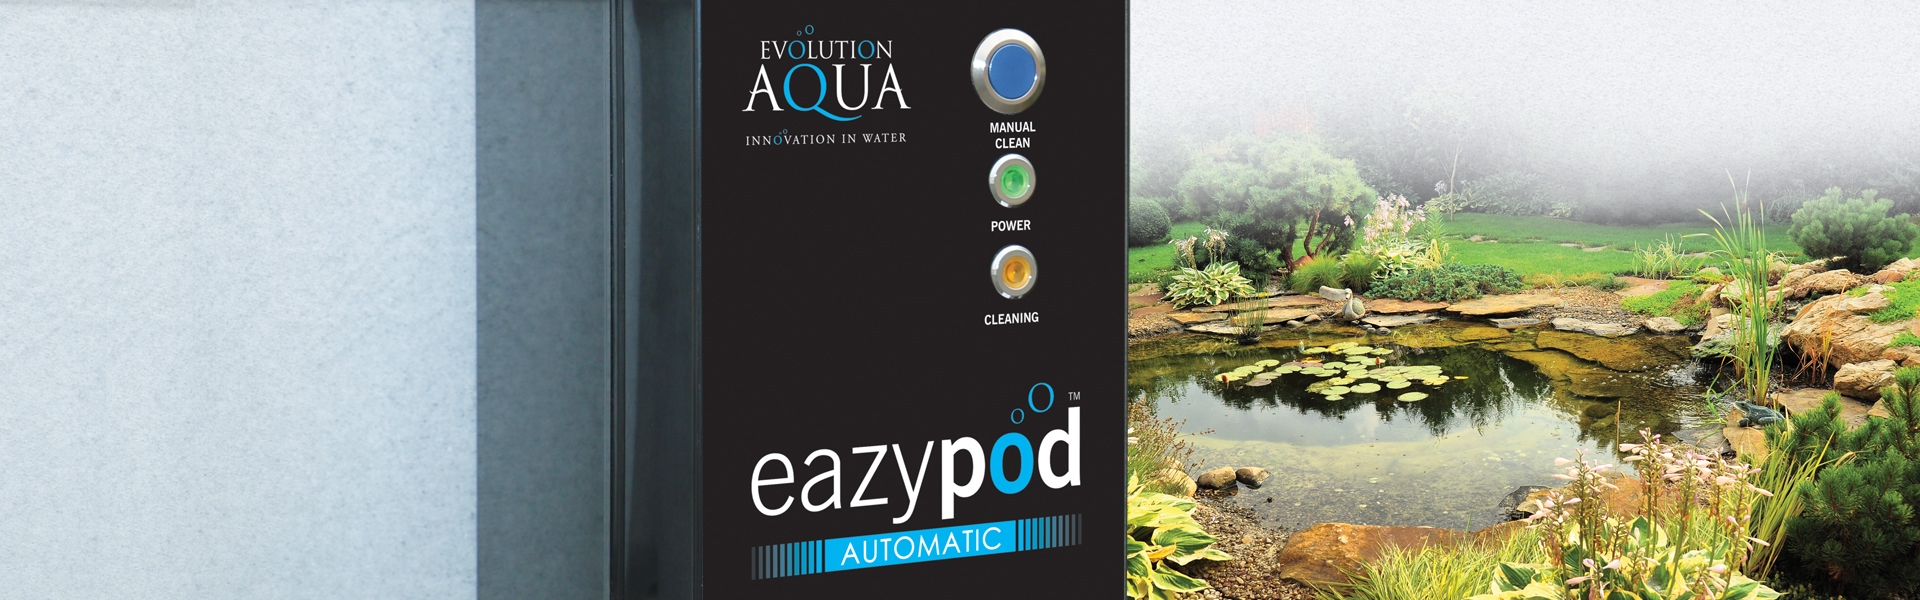 Evolution Aqua EazypodUV Automatic Self-Cleaning Pond Filtration System with 18 Watt Clarifier 